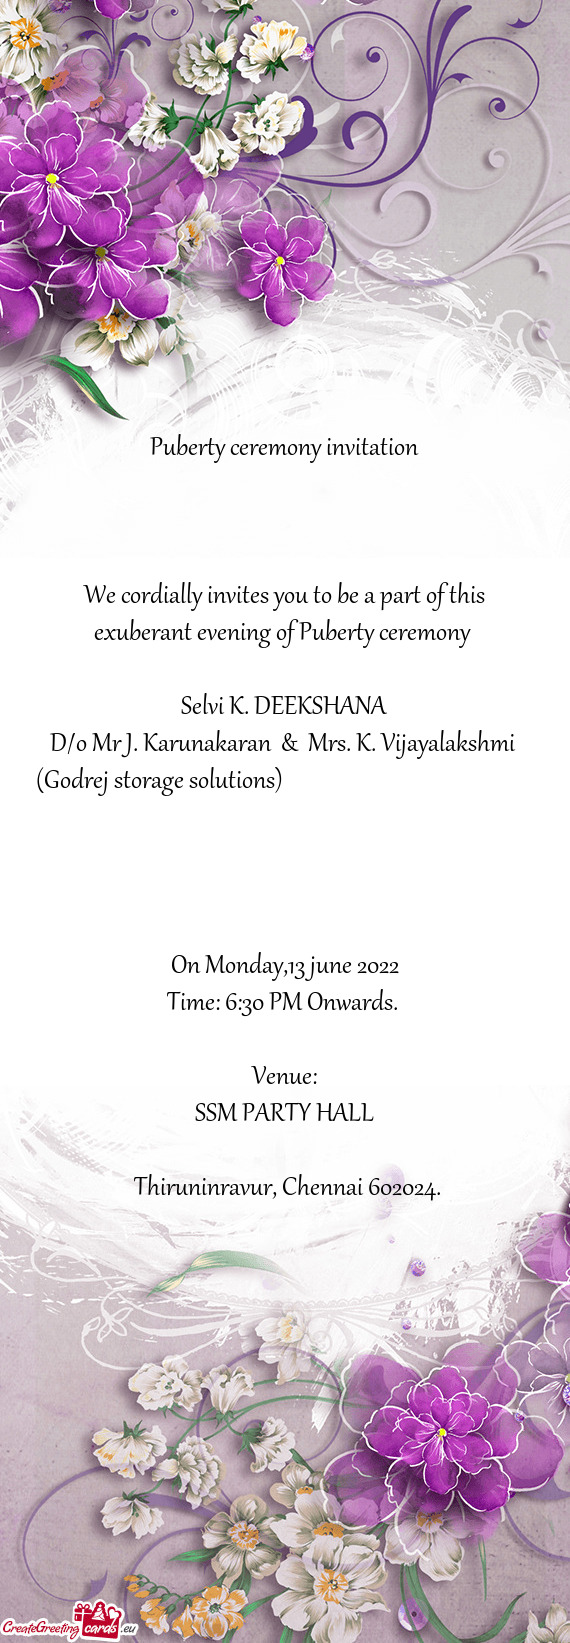 Of Puberty ceremony  Selvi K